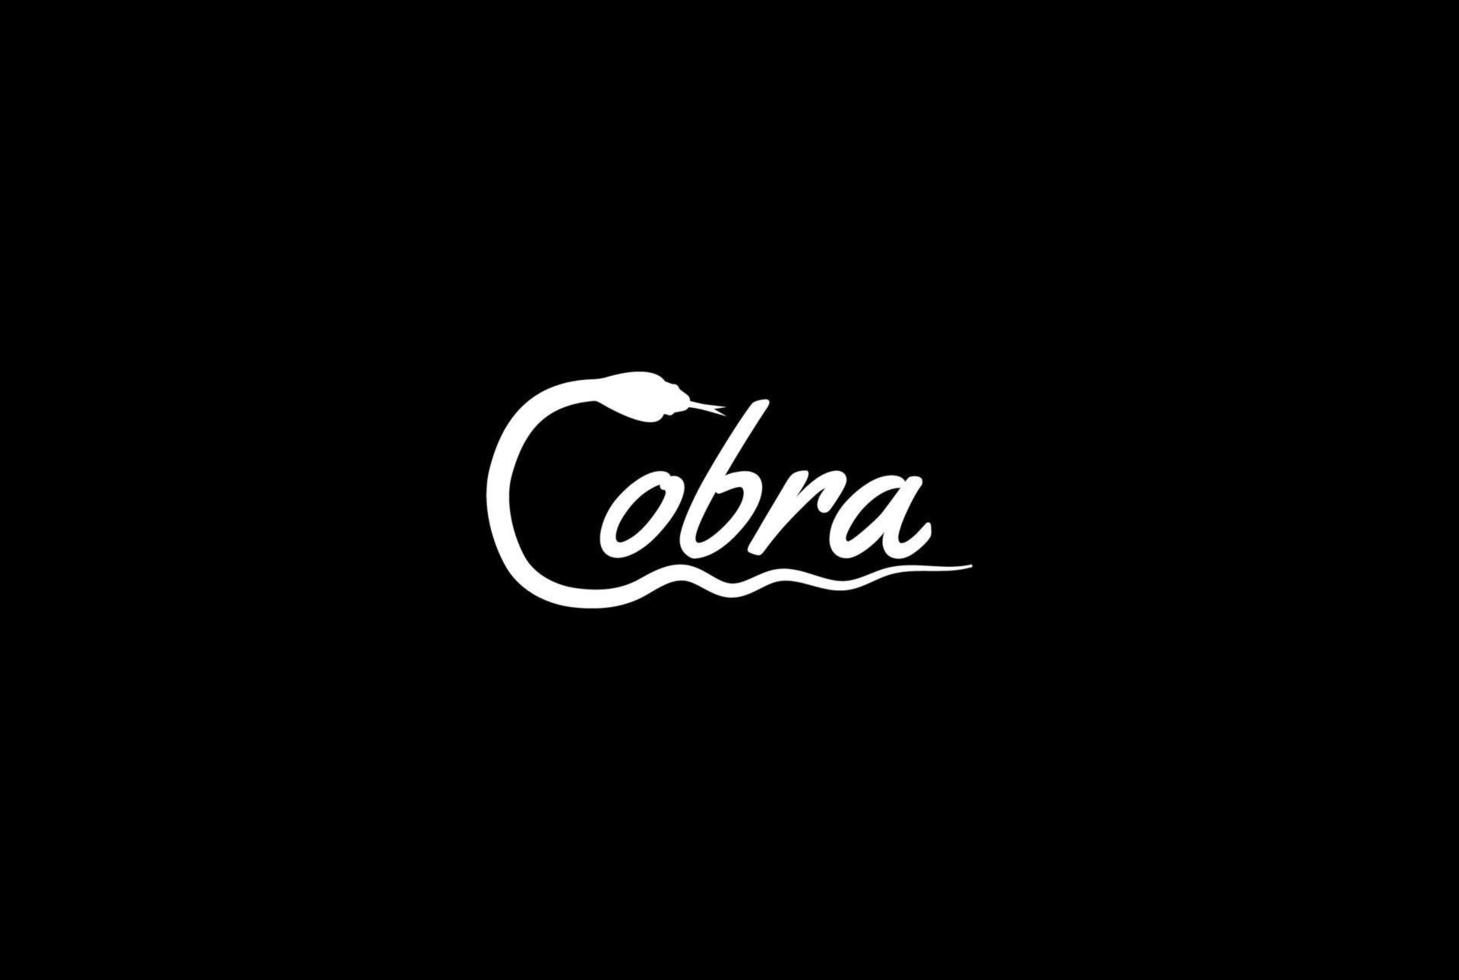 slang brief cobra woord tekst lettertype type typografie logo ontwerp vector